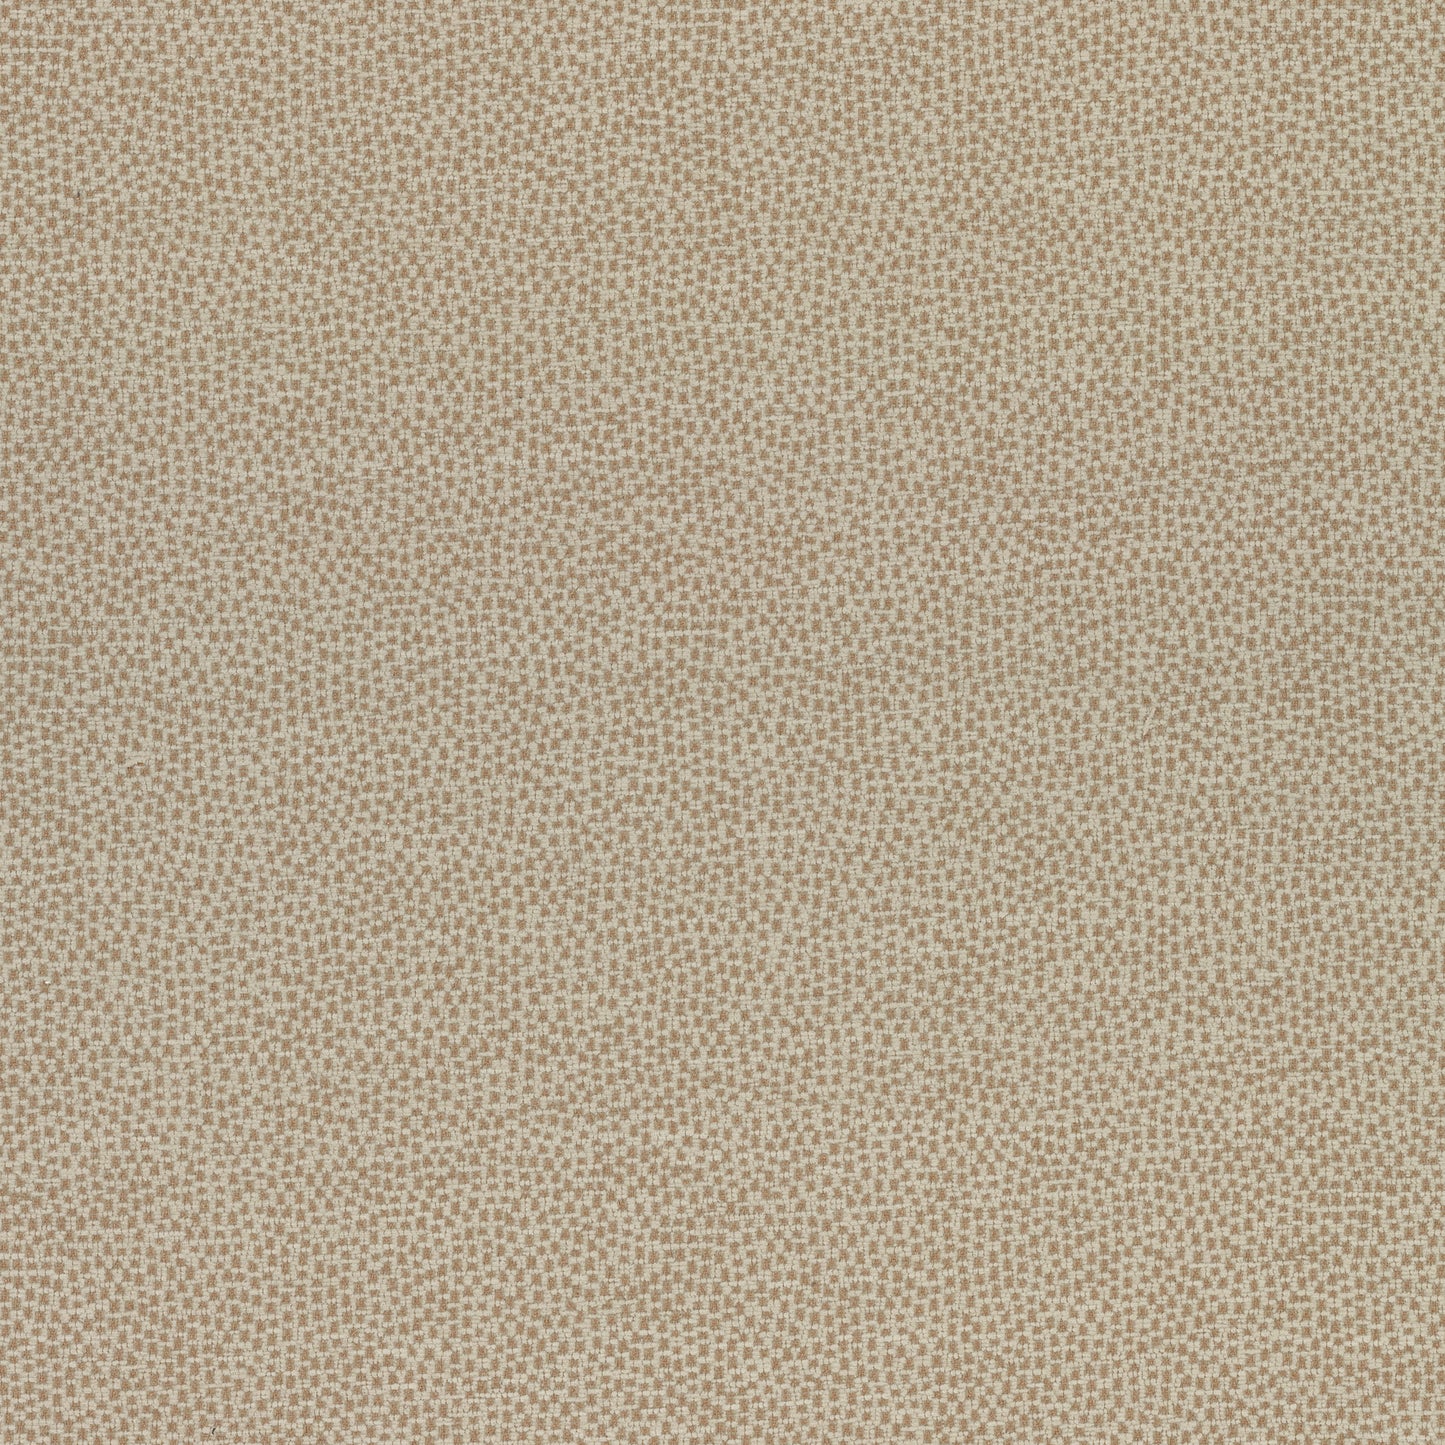 Purchase Thibaut Fabric Pattern W74076 pattern name Nala color Sand